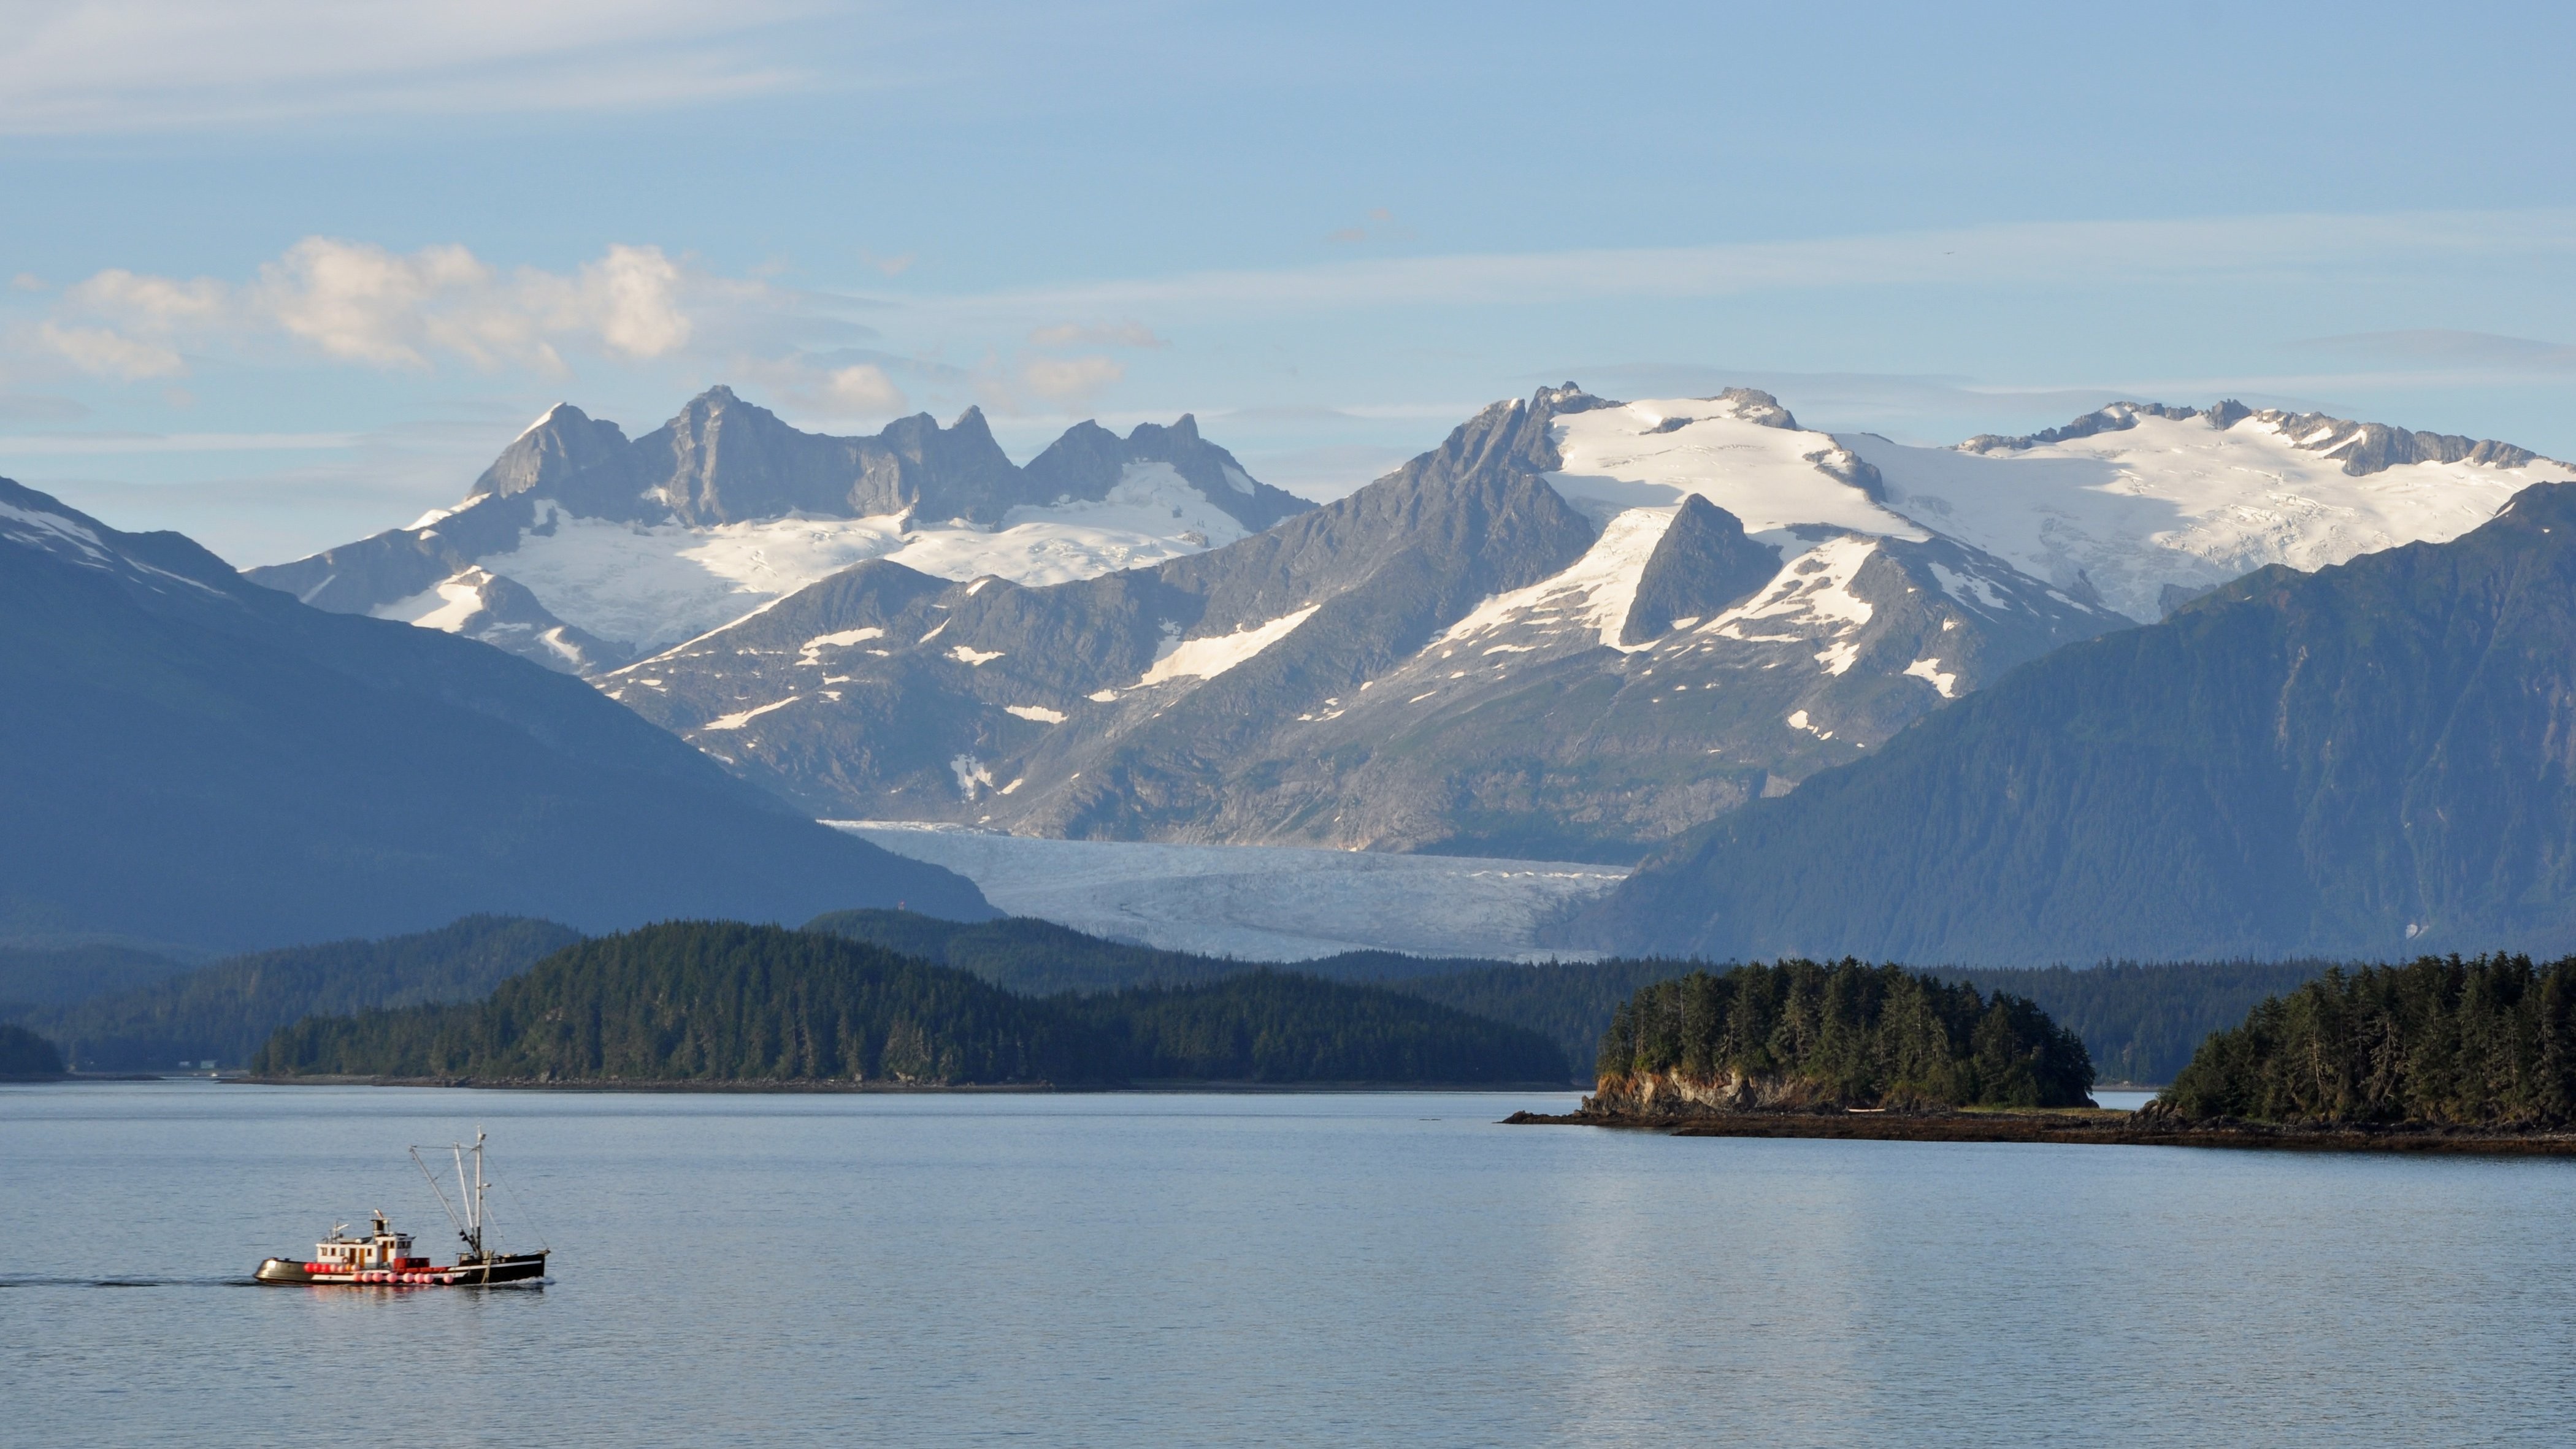 General 4200x2363 glacier Alaska mountains landscape nordic landscapes snow boat vehicle outdoors